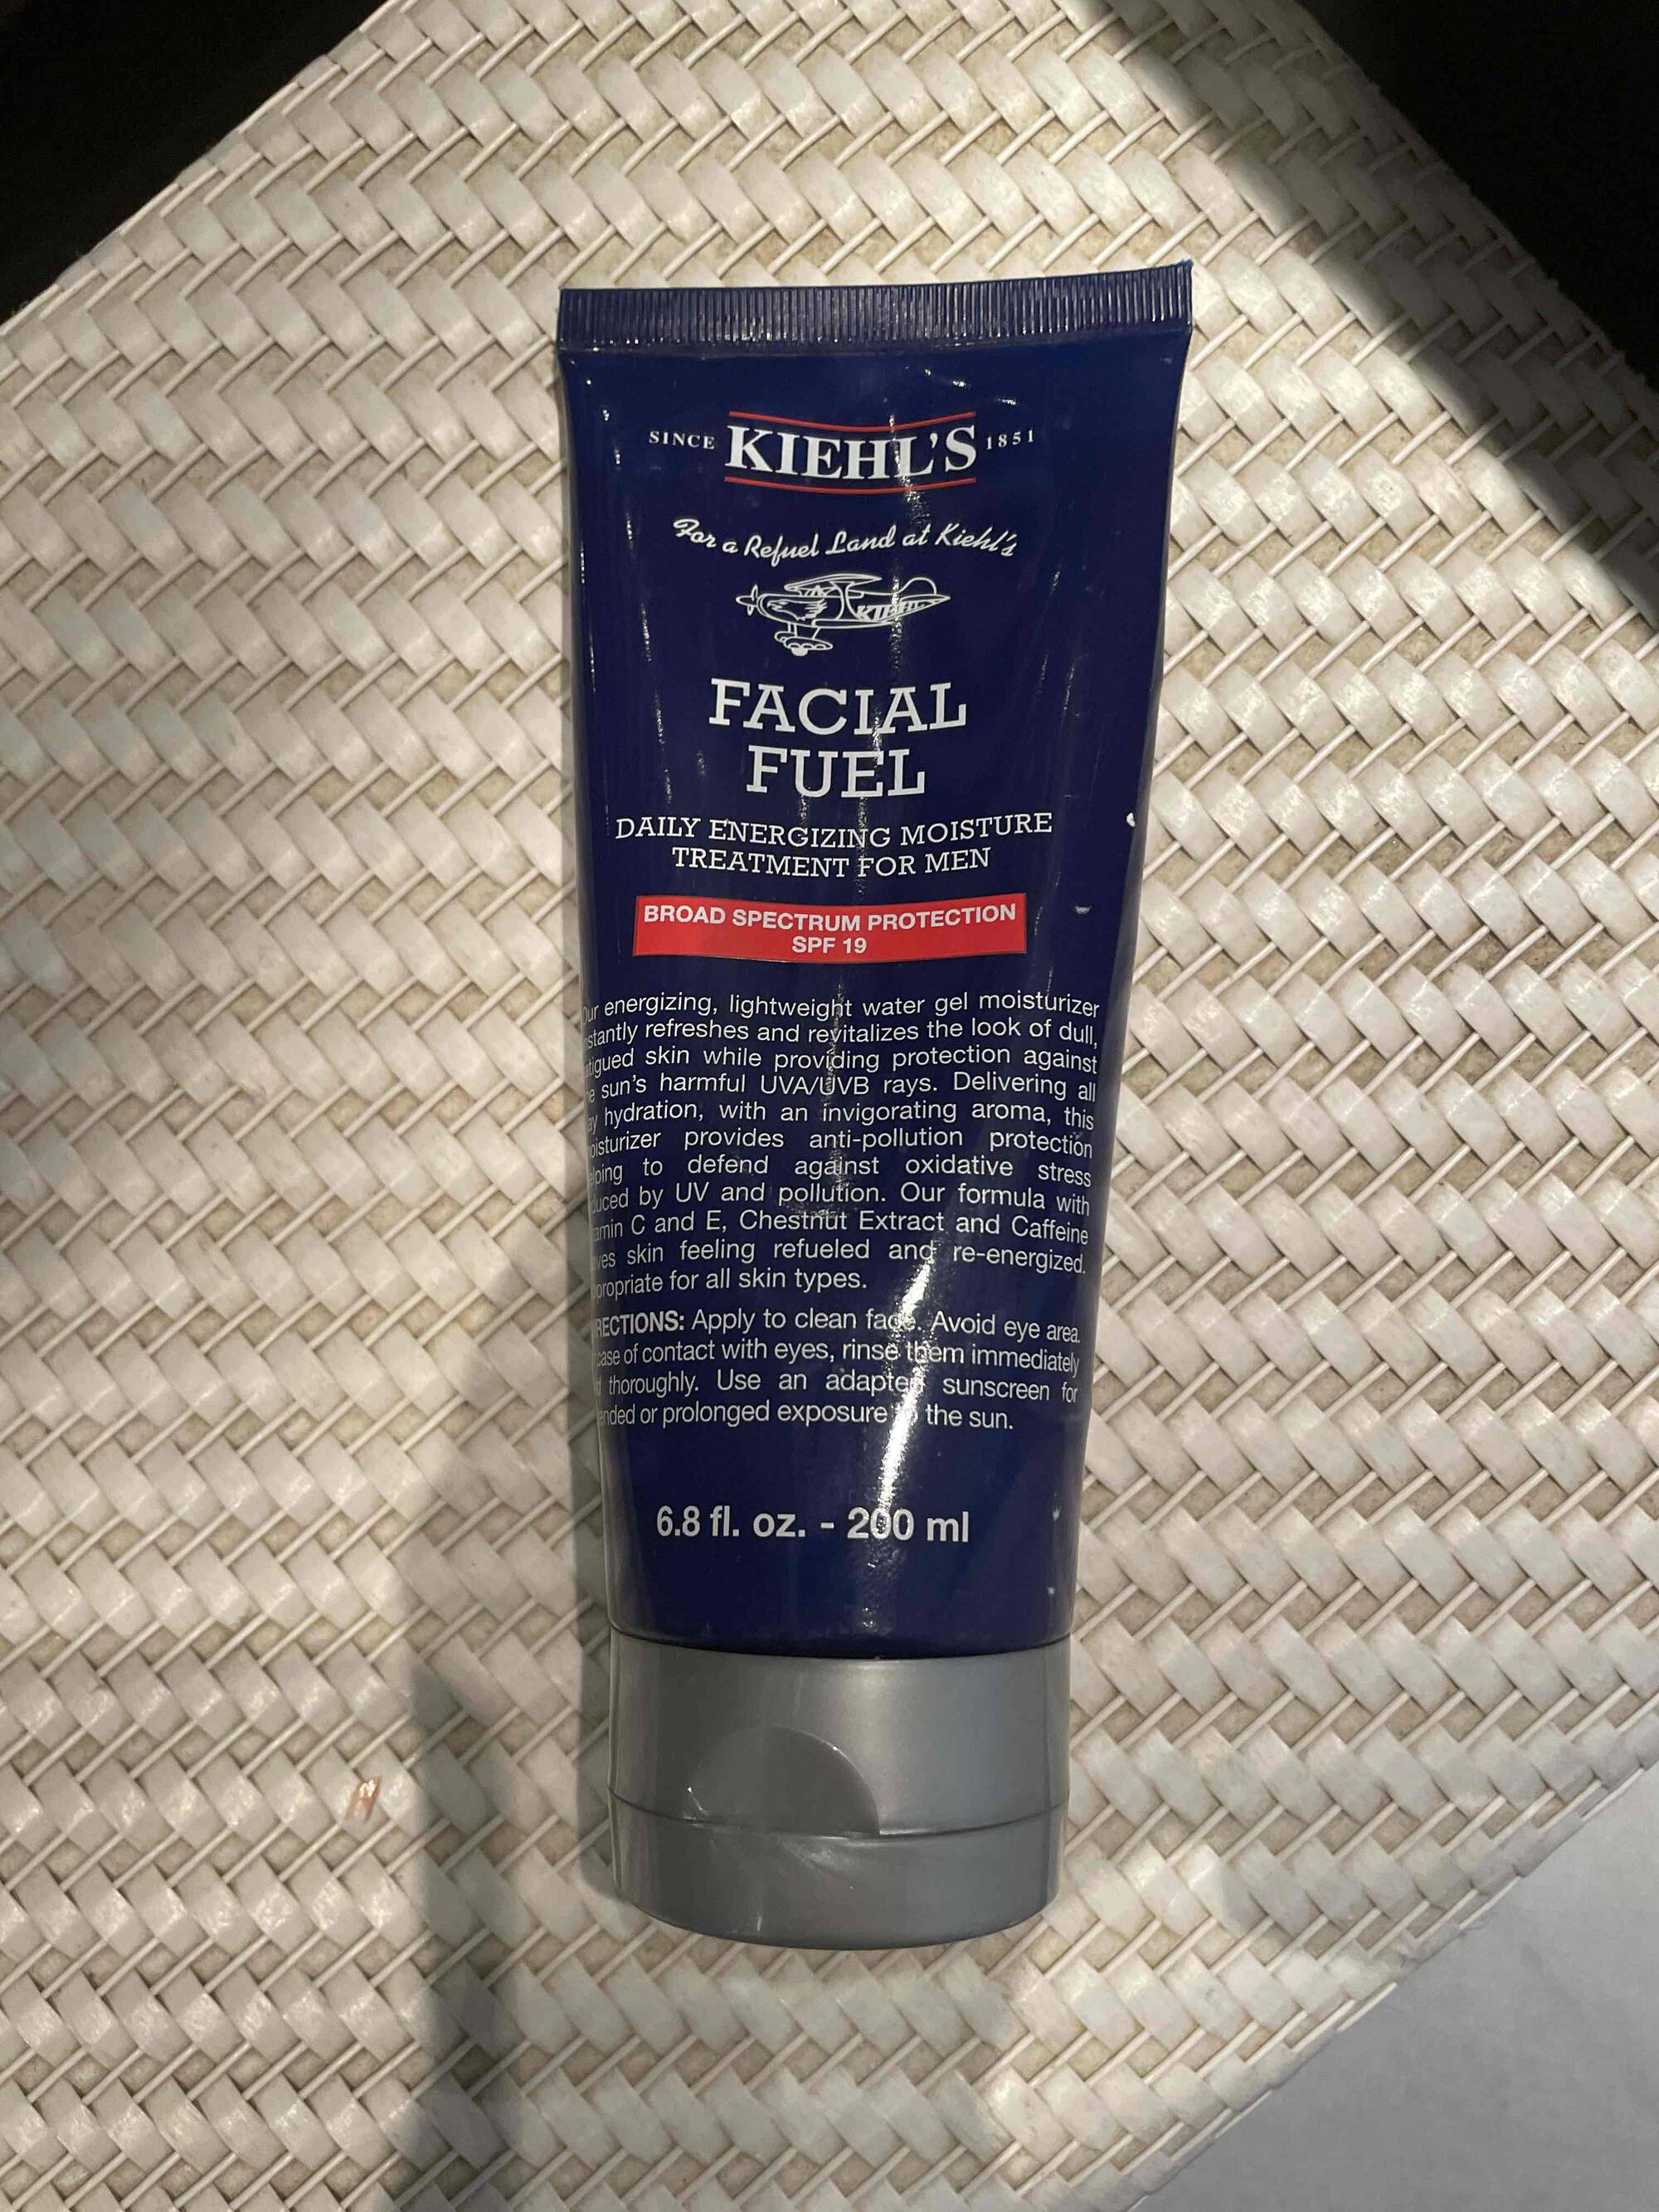 KIEHL'S - Facial Fuel - Daily enercizing moisture treatment for men